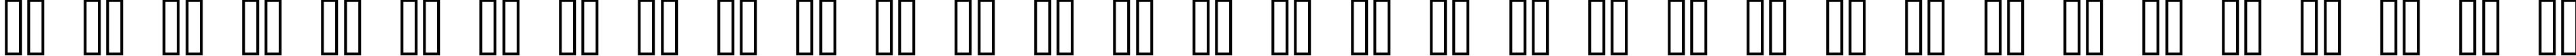 Пример написания русского алфавита шрифтом italic 08_66